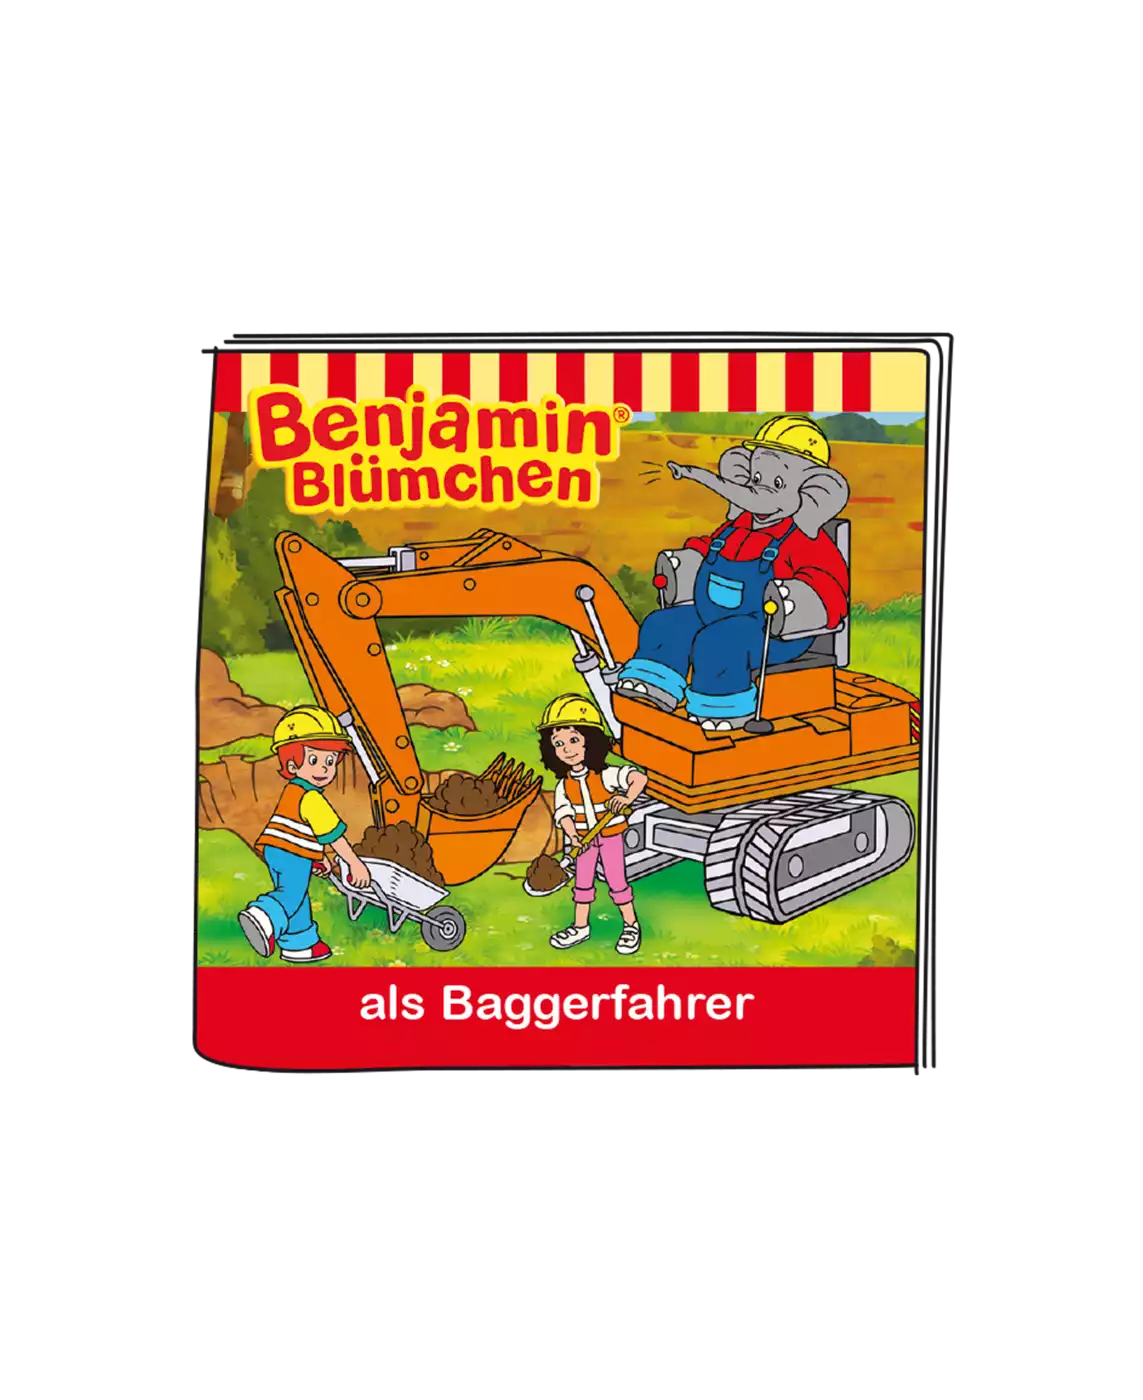 Benjamin Blümchen als Baggerfahrer tonies 2000572877404 5